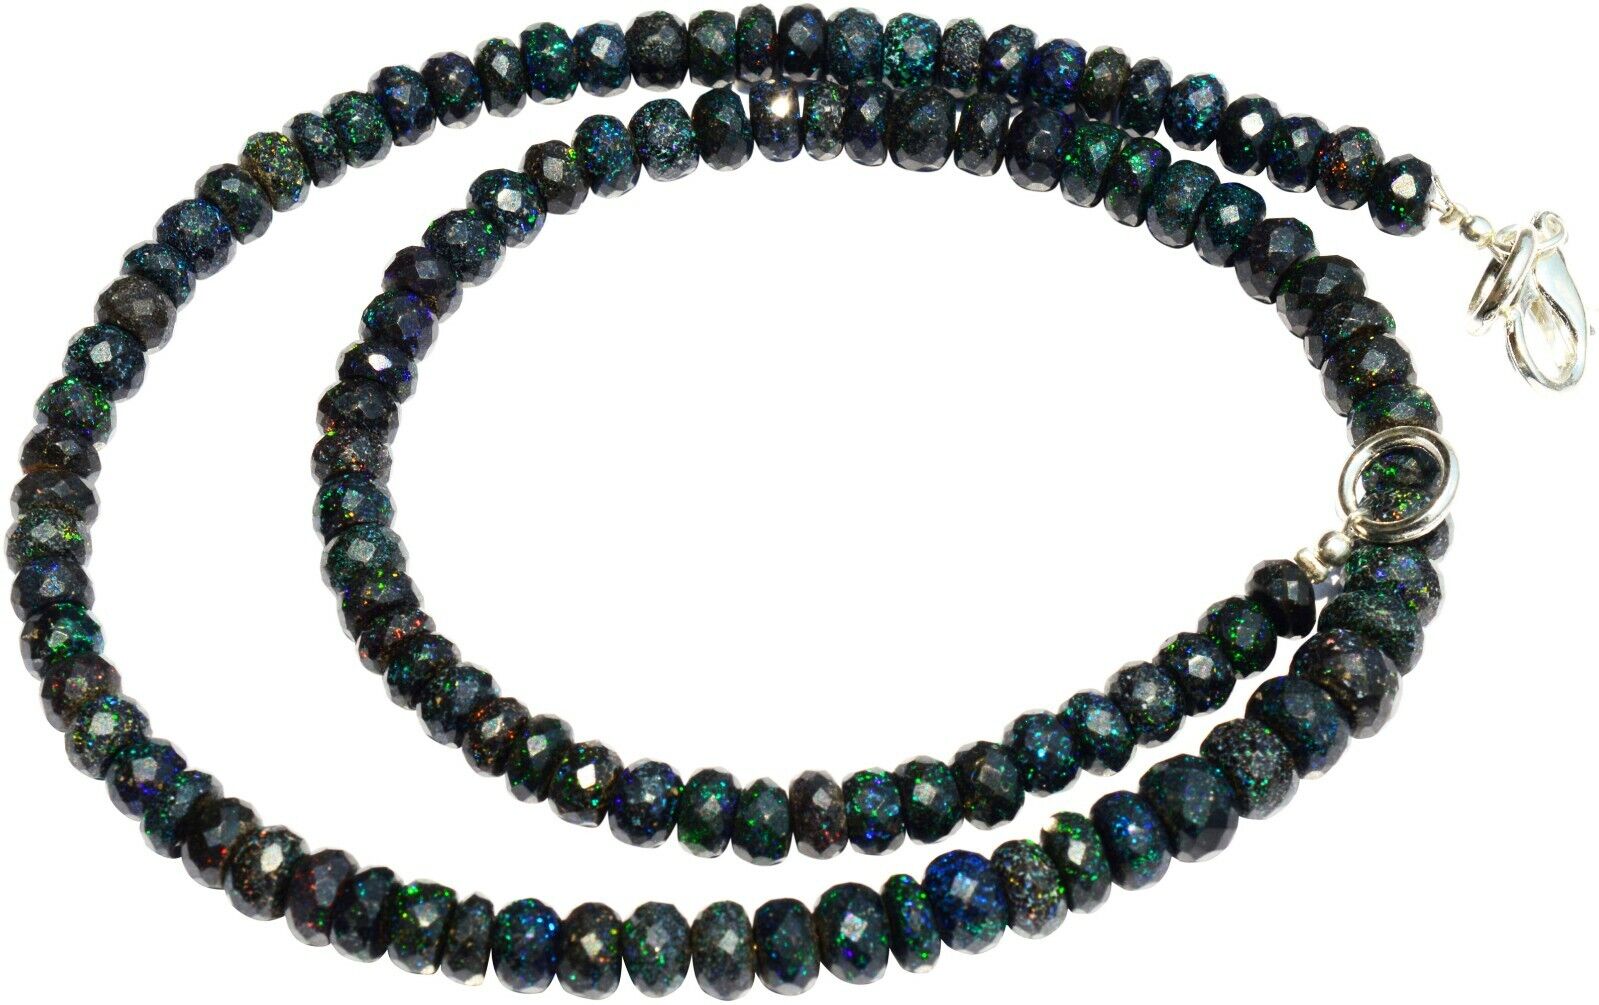 Natural Australian Black Matrix Fire Opal 6mm Size Rondelle Beads Necklace 16